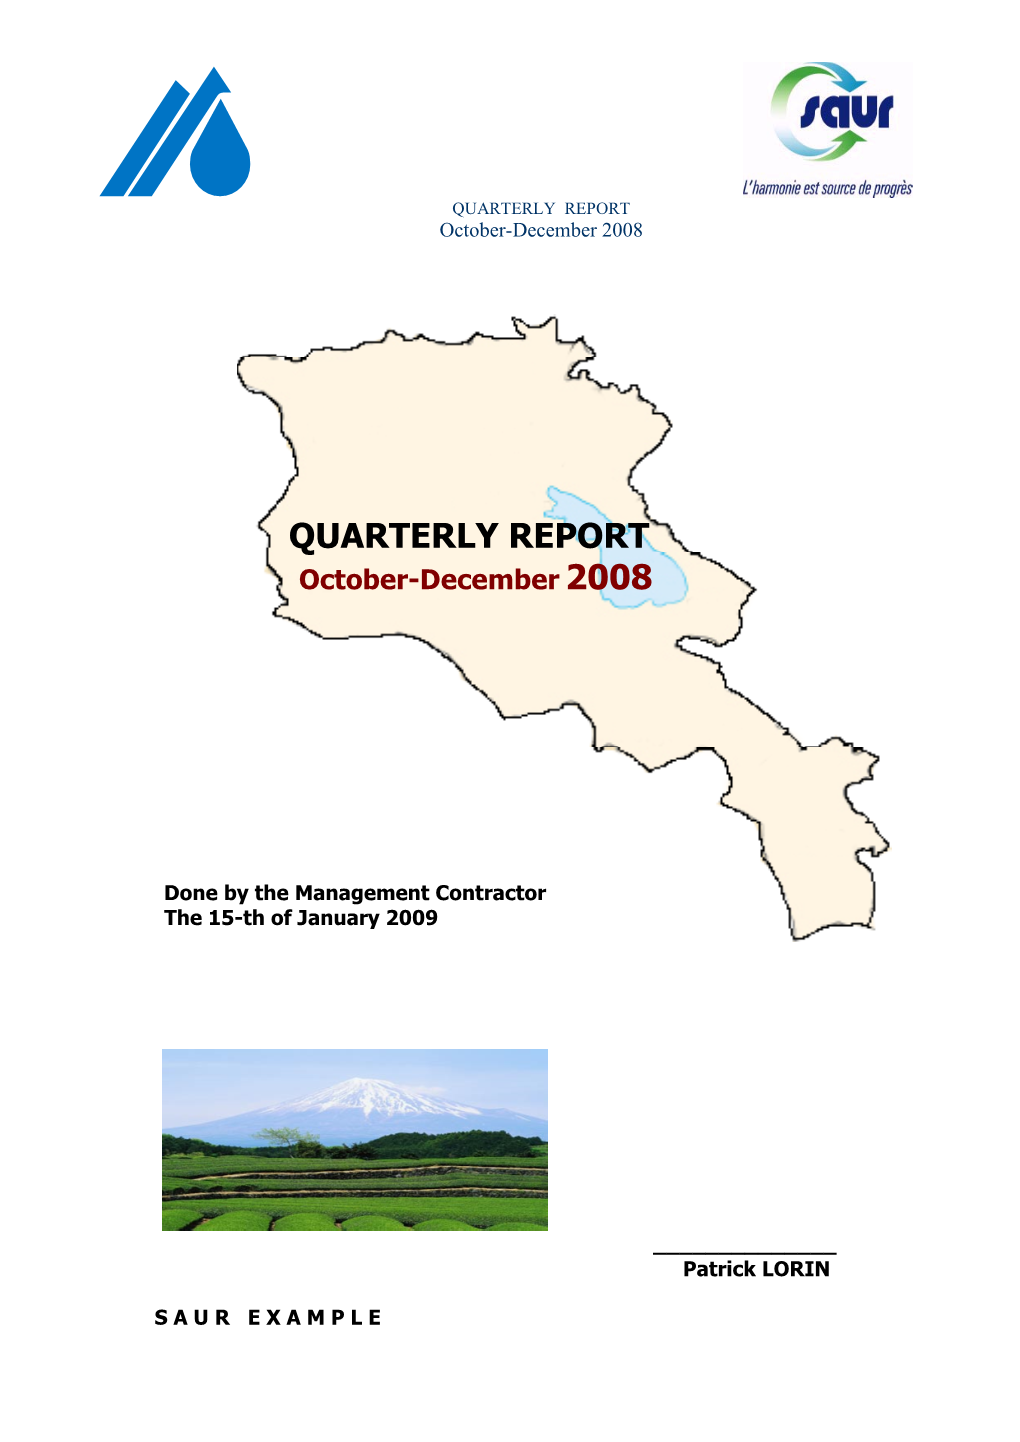 QUARTERLY REPORT October-December 2008